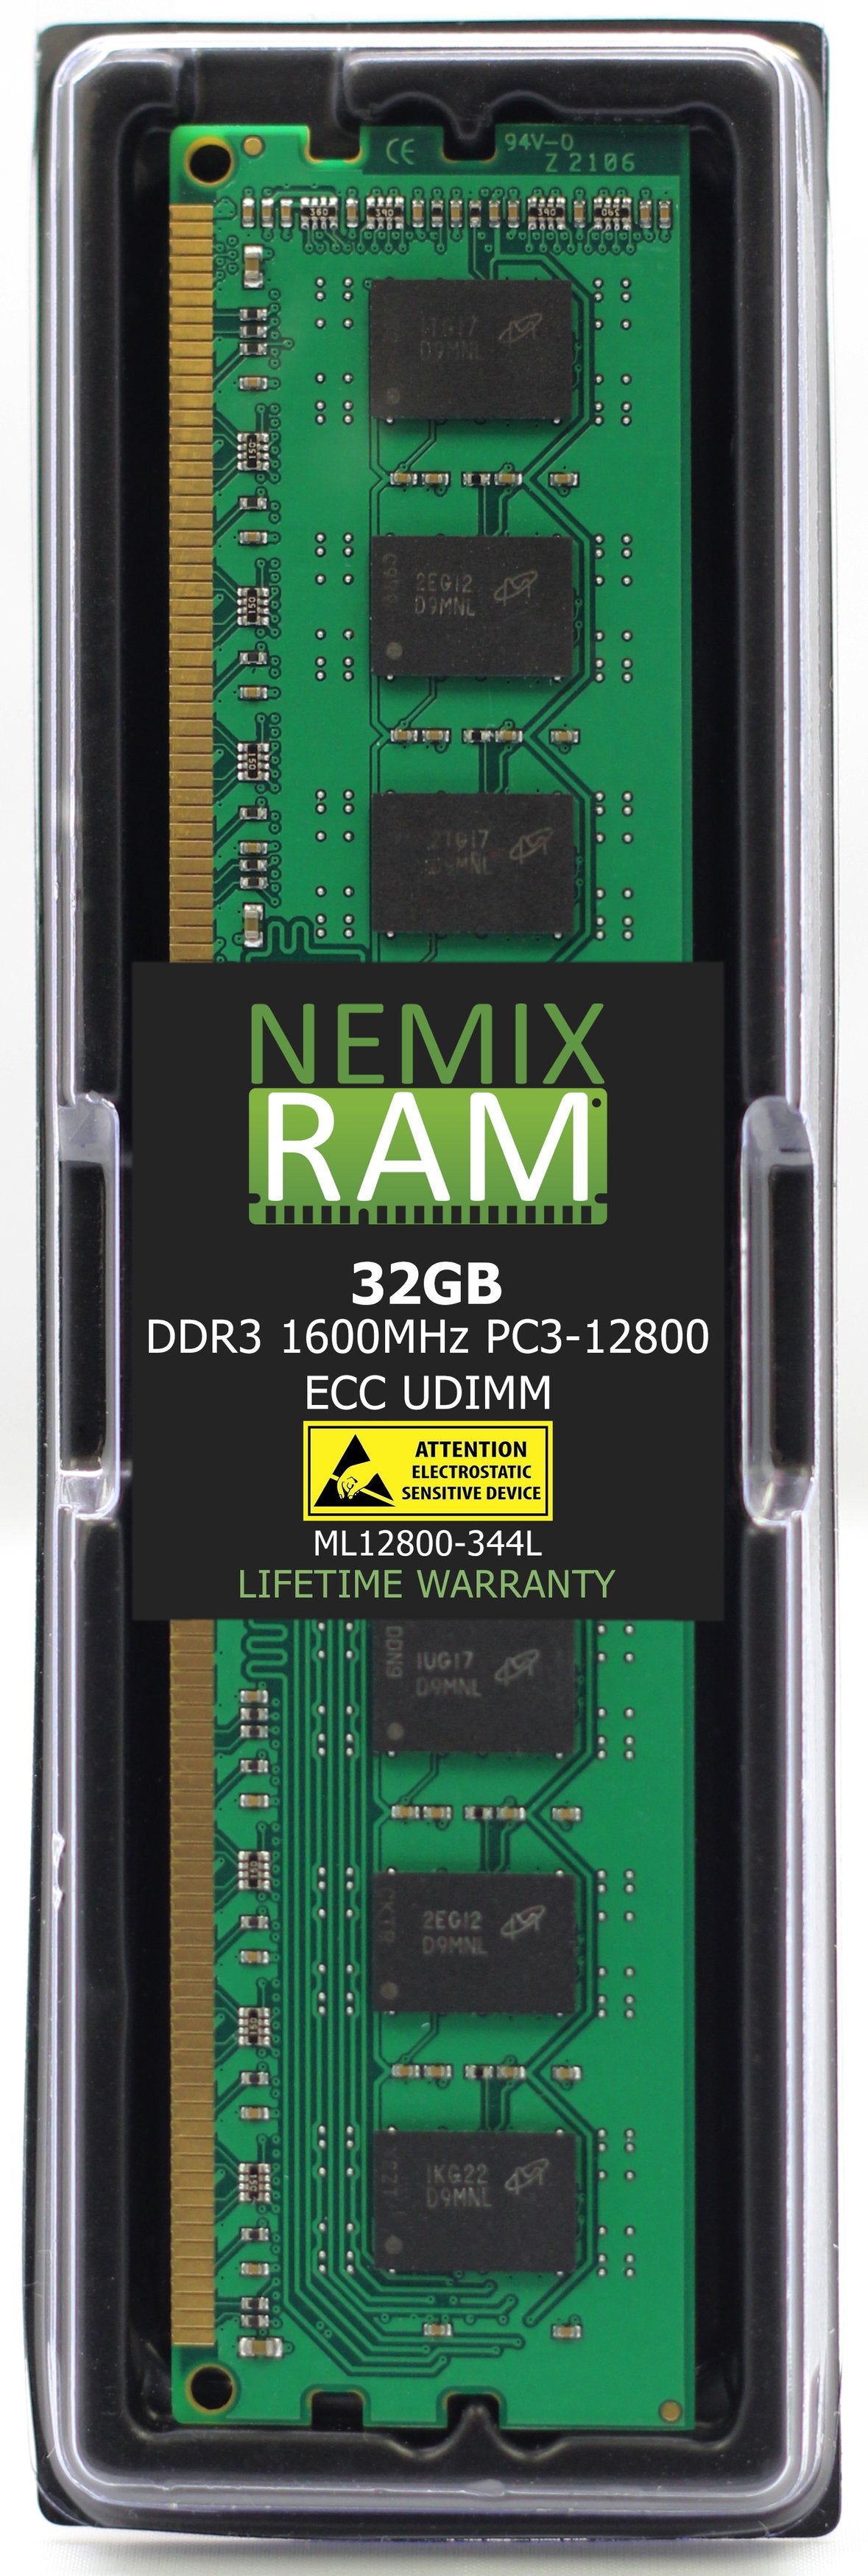 Hynix HMT84GL7AMR4A-PB 32GB DDR3 1600MHZ PC3-12800 LRDIMM Compatible Memory Module